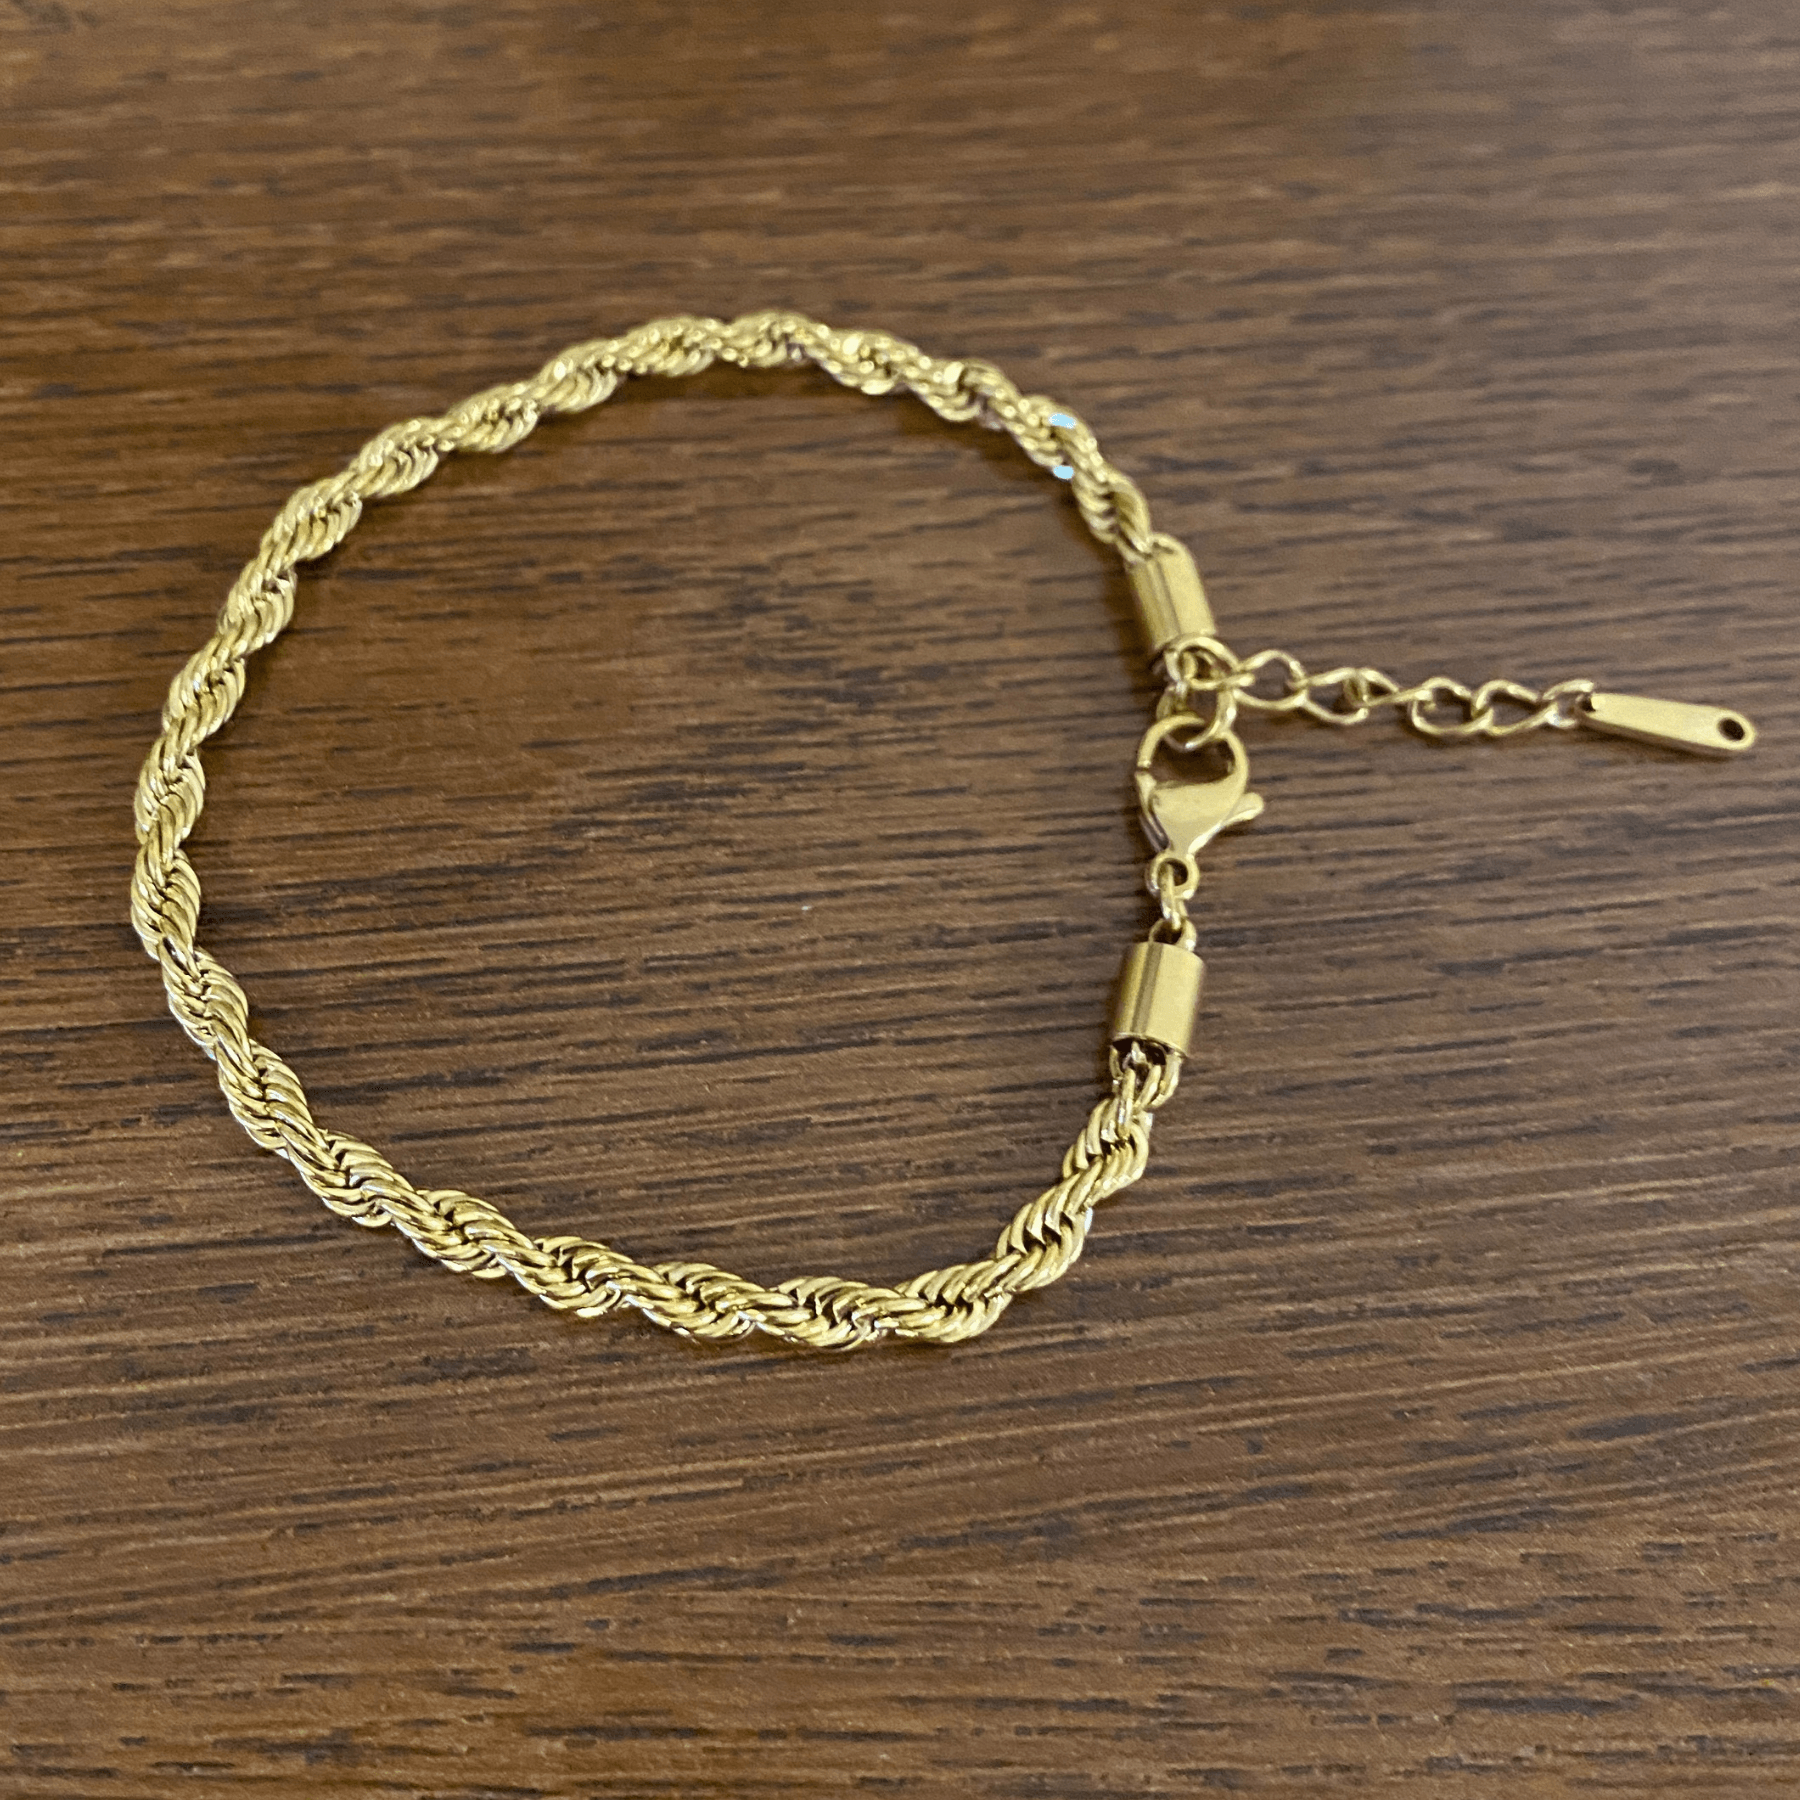 Gold Classic Braided Rope Anklet/Bracelet - JACK